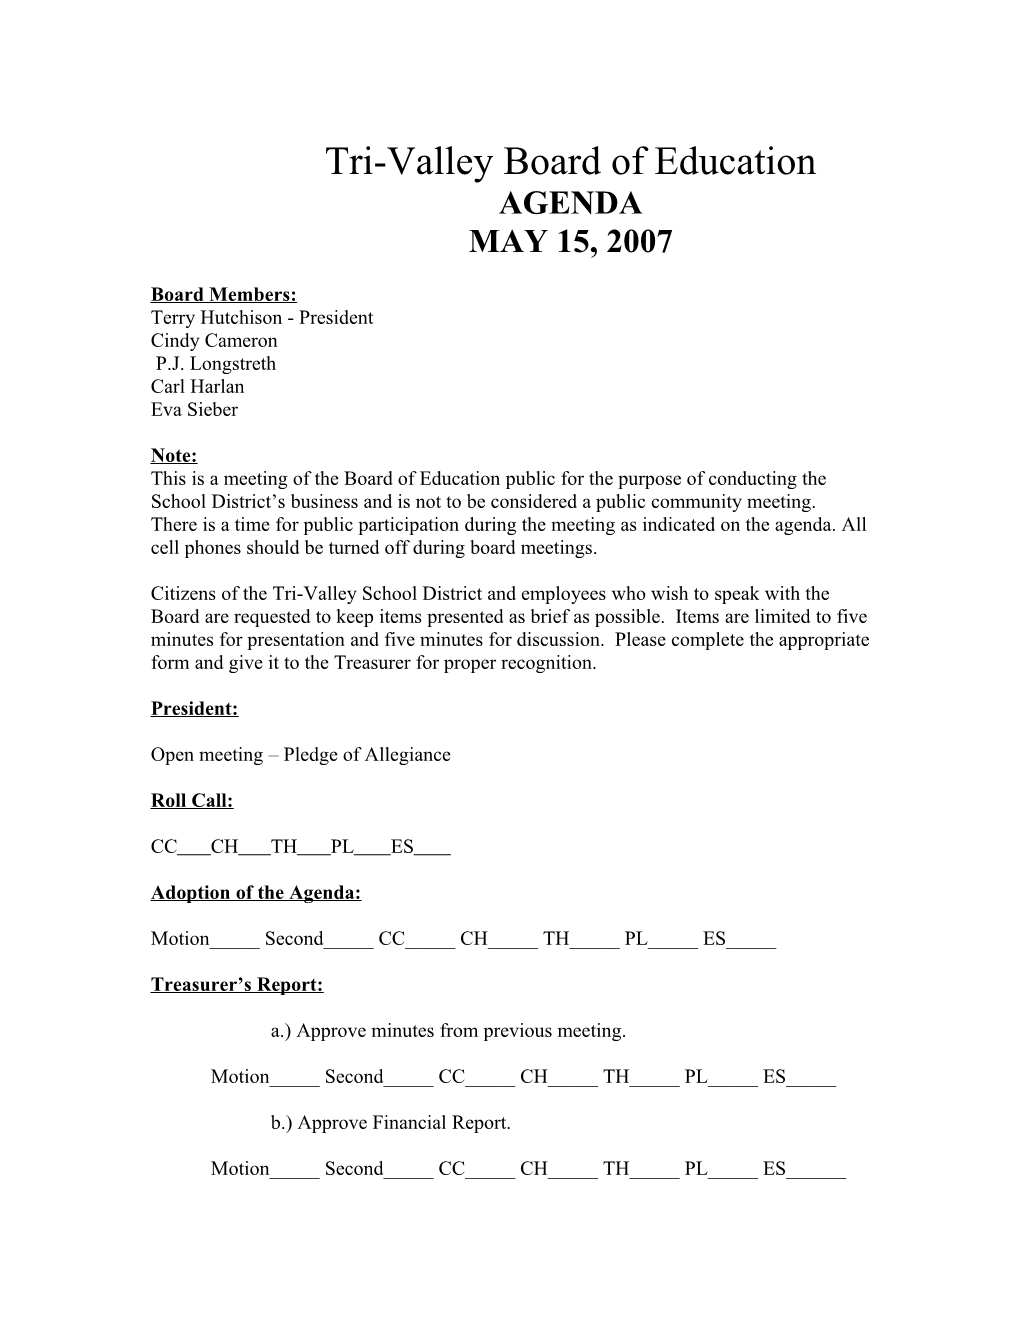 Tri-Valley Board of Education AGENDA